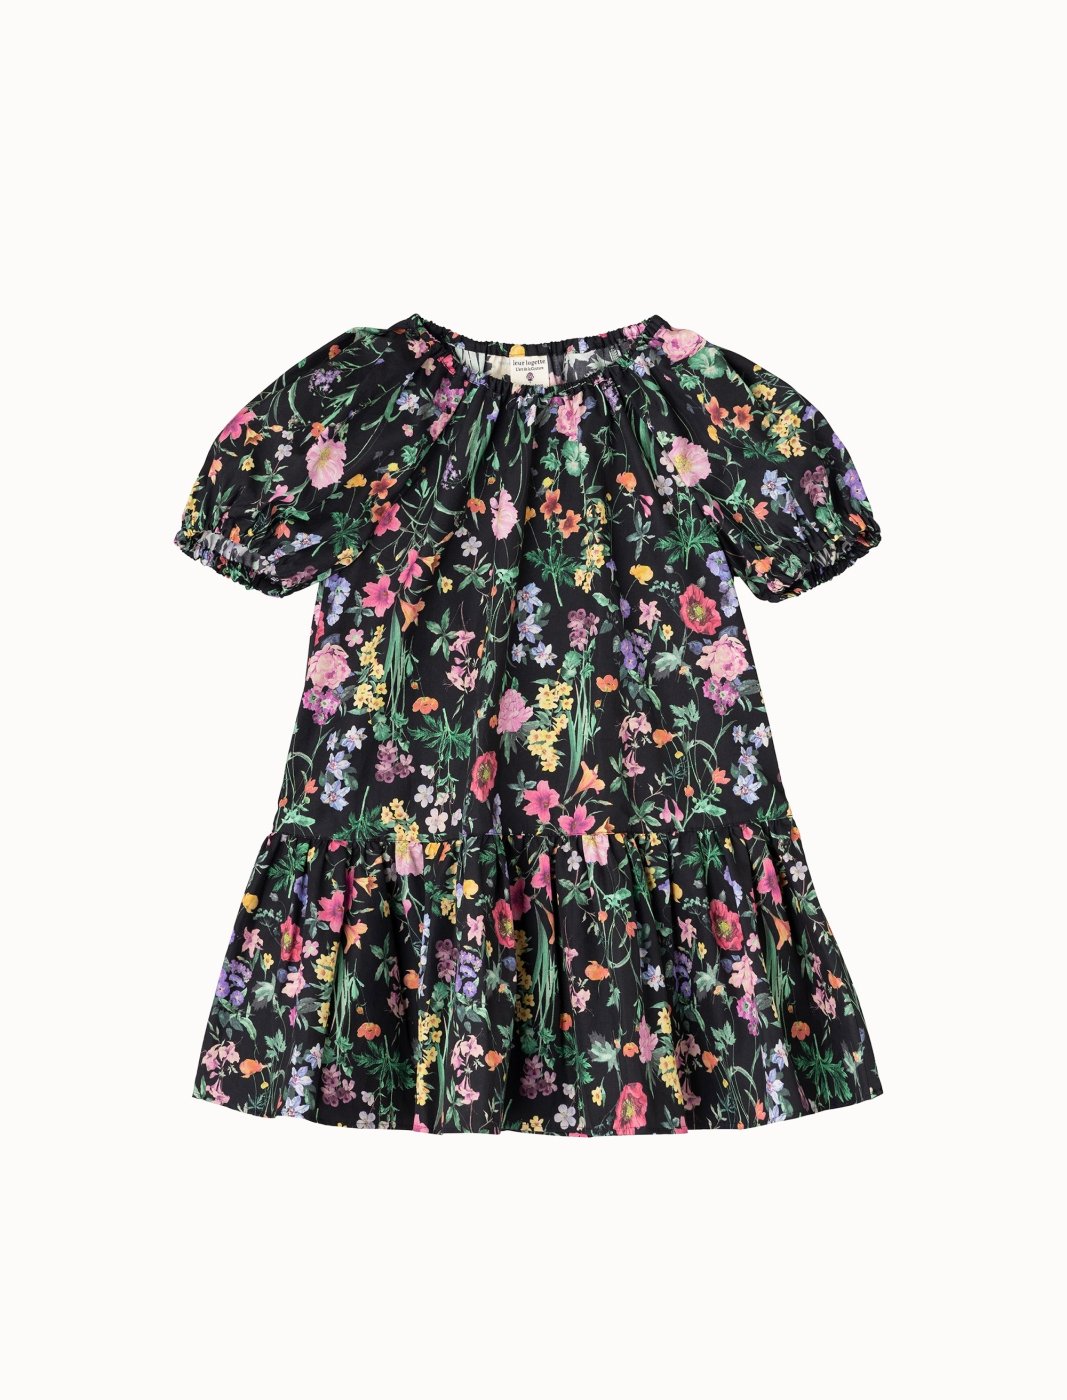 【Kids】 Derek Garden Print Dress - Black - leur logette ルール ロジェット | オフィシャル  オンラインショップ